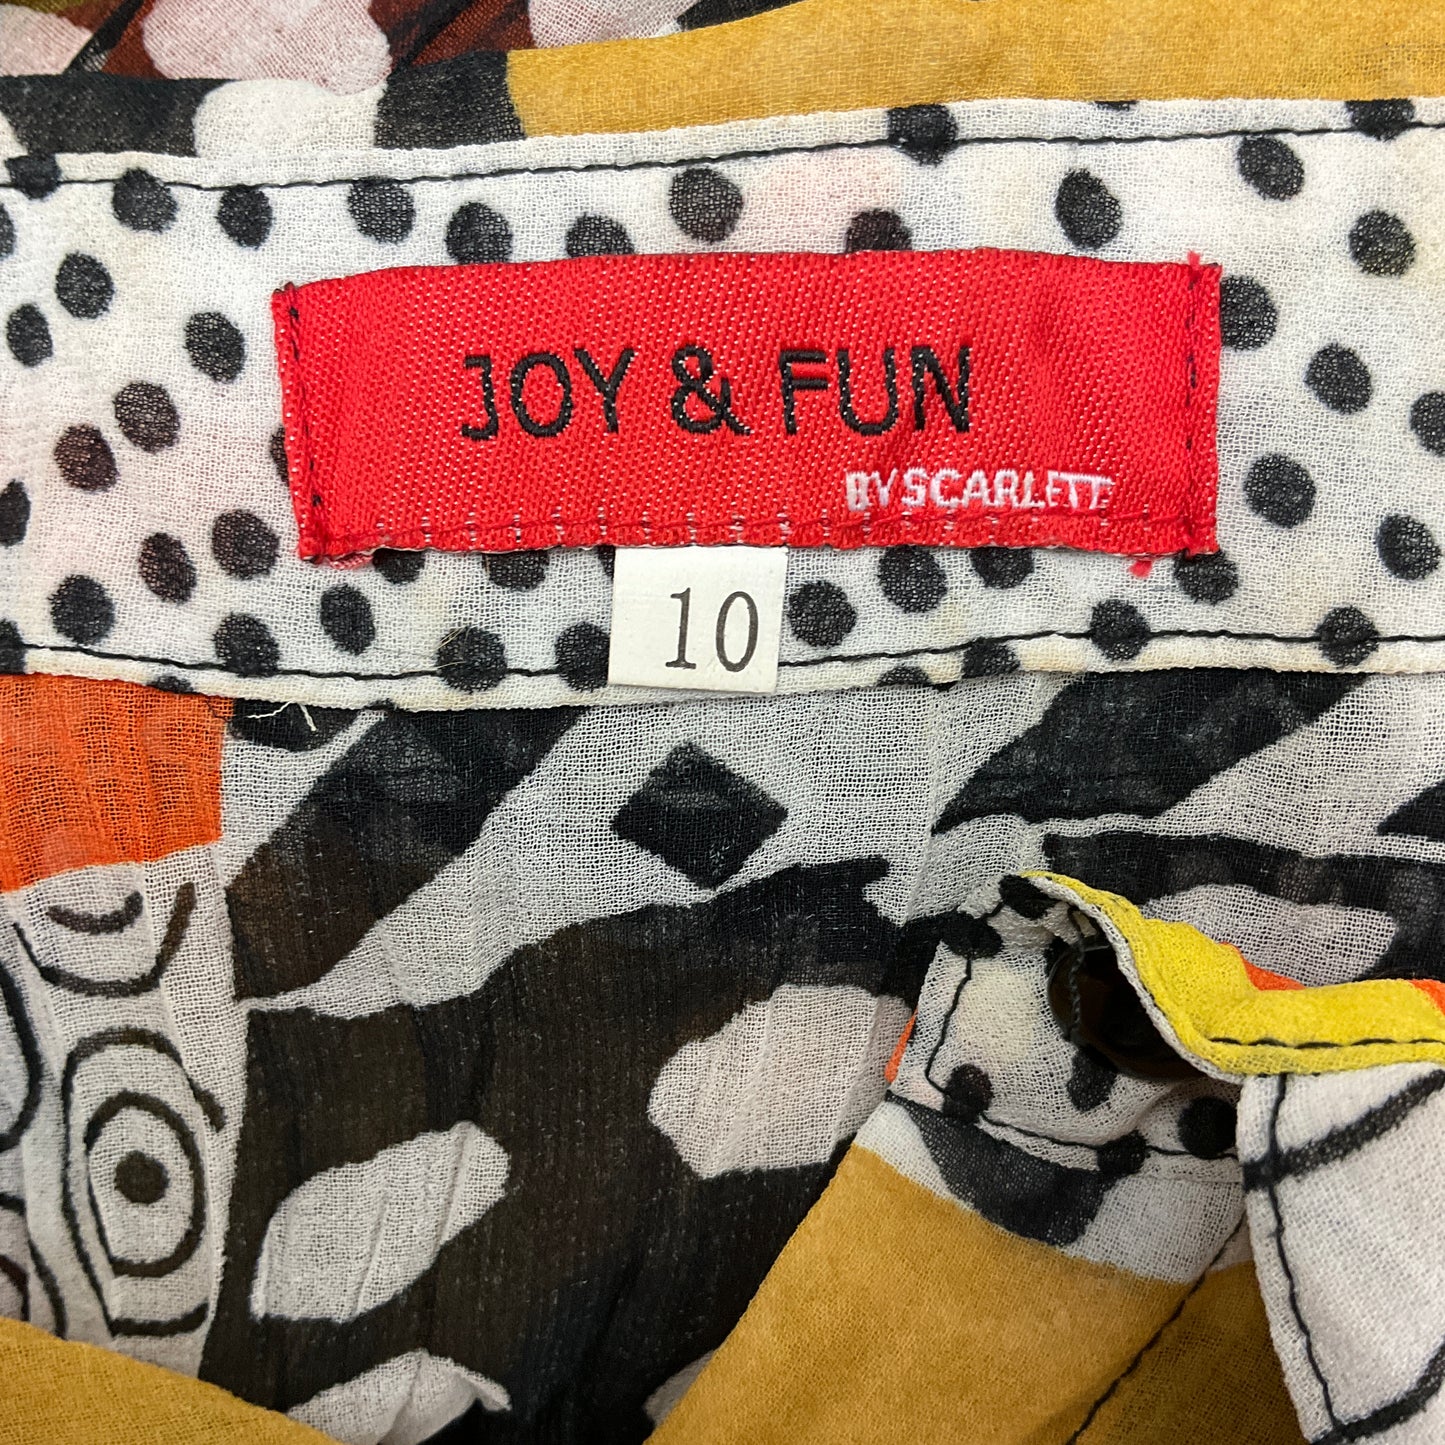 Joy & Fun - Top